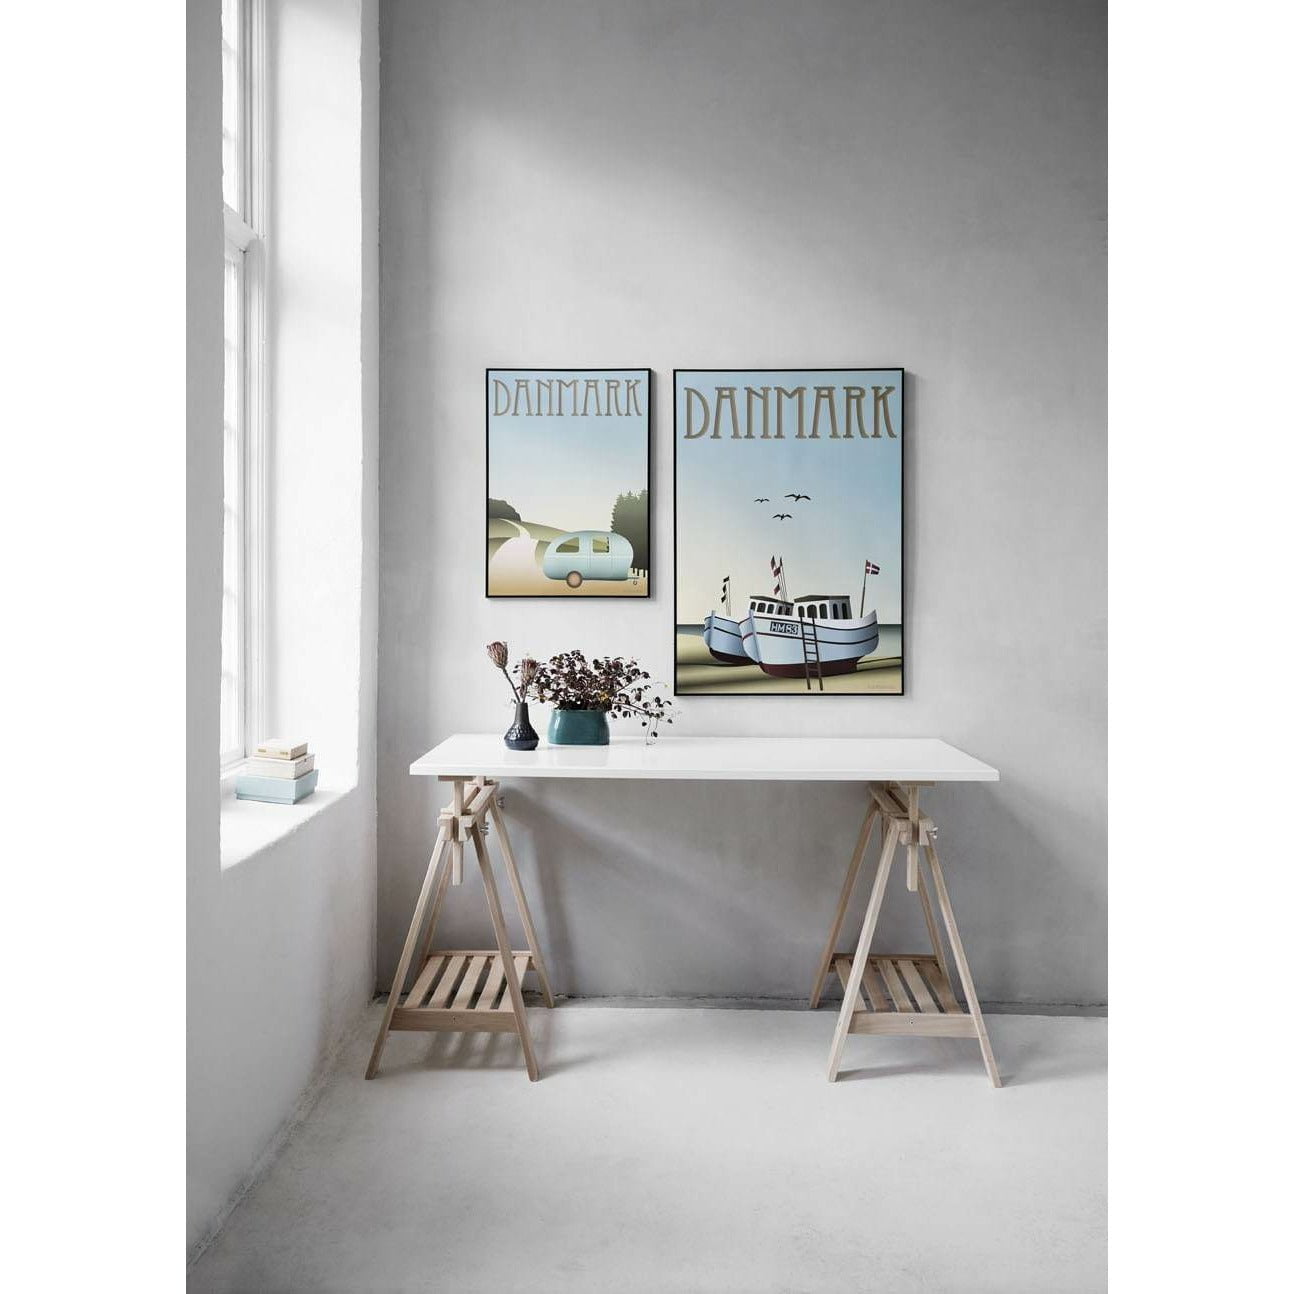 Plakat łodzi rybackich Vissevasse Danii, 70 x 100 cm